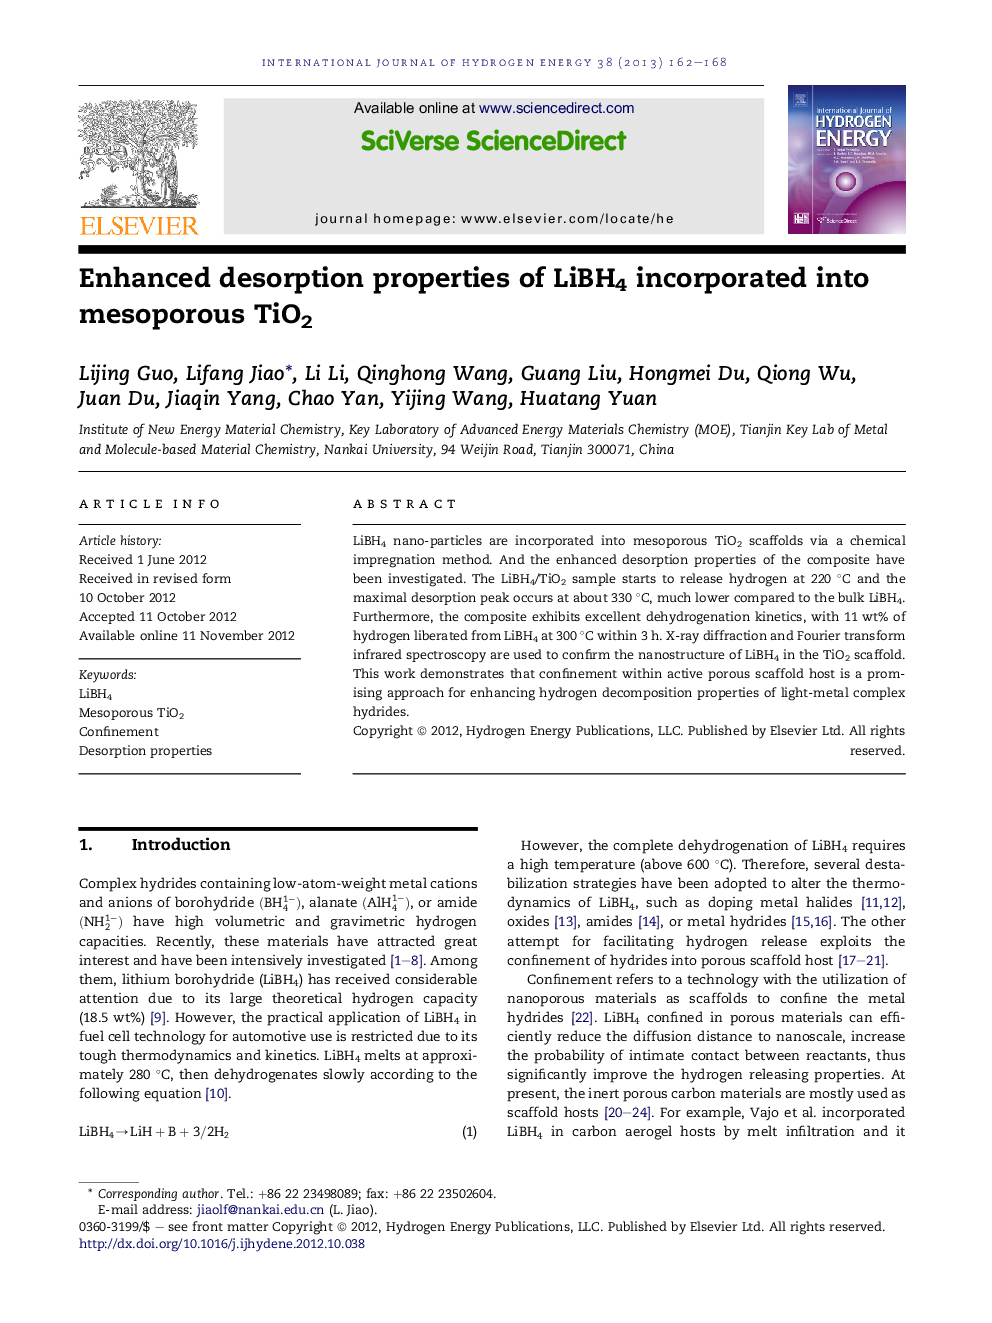 Enhanced desorption properties of LiBH4 incorporated into mesoporous TiO2